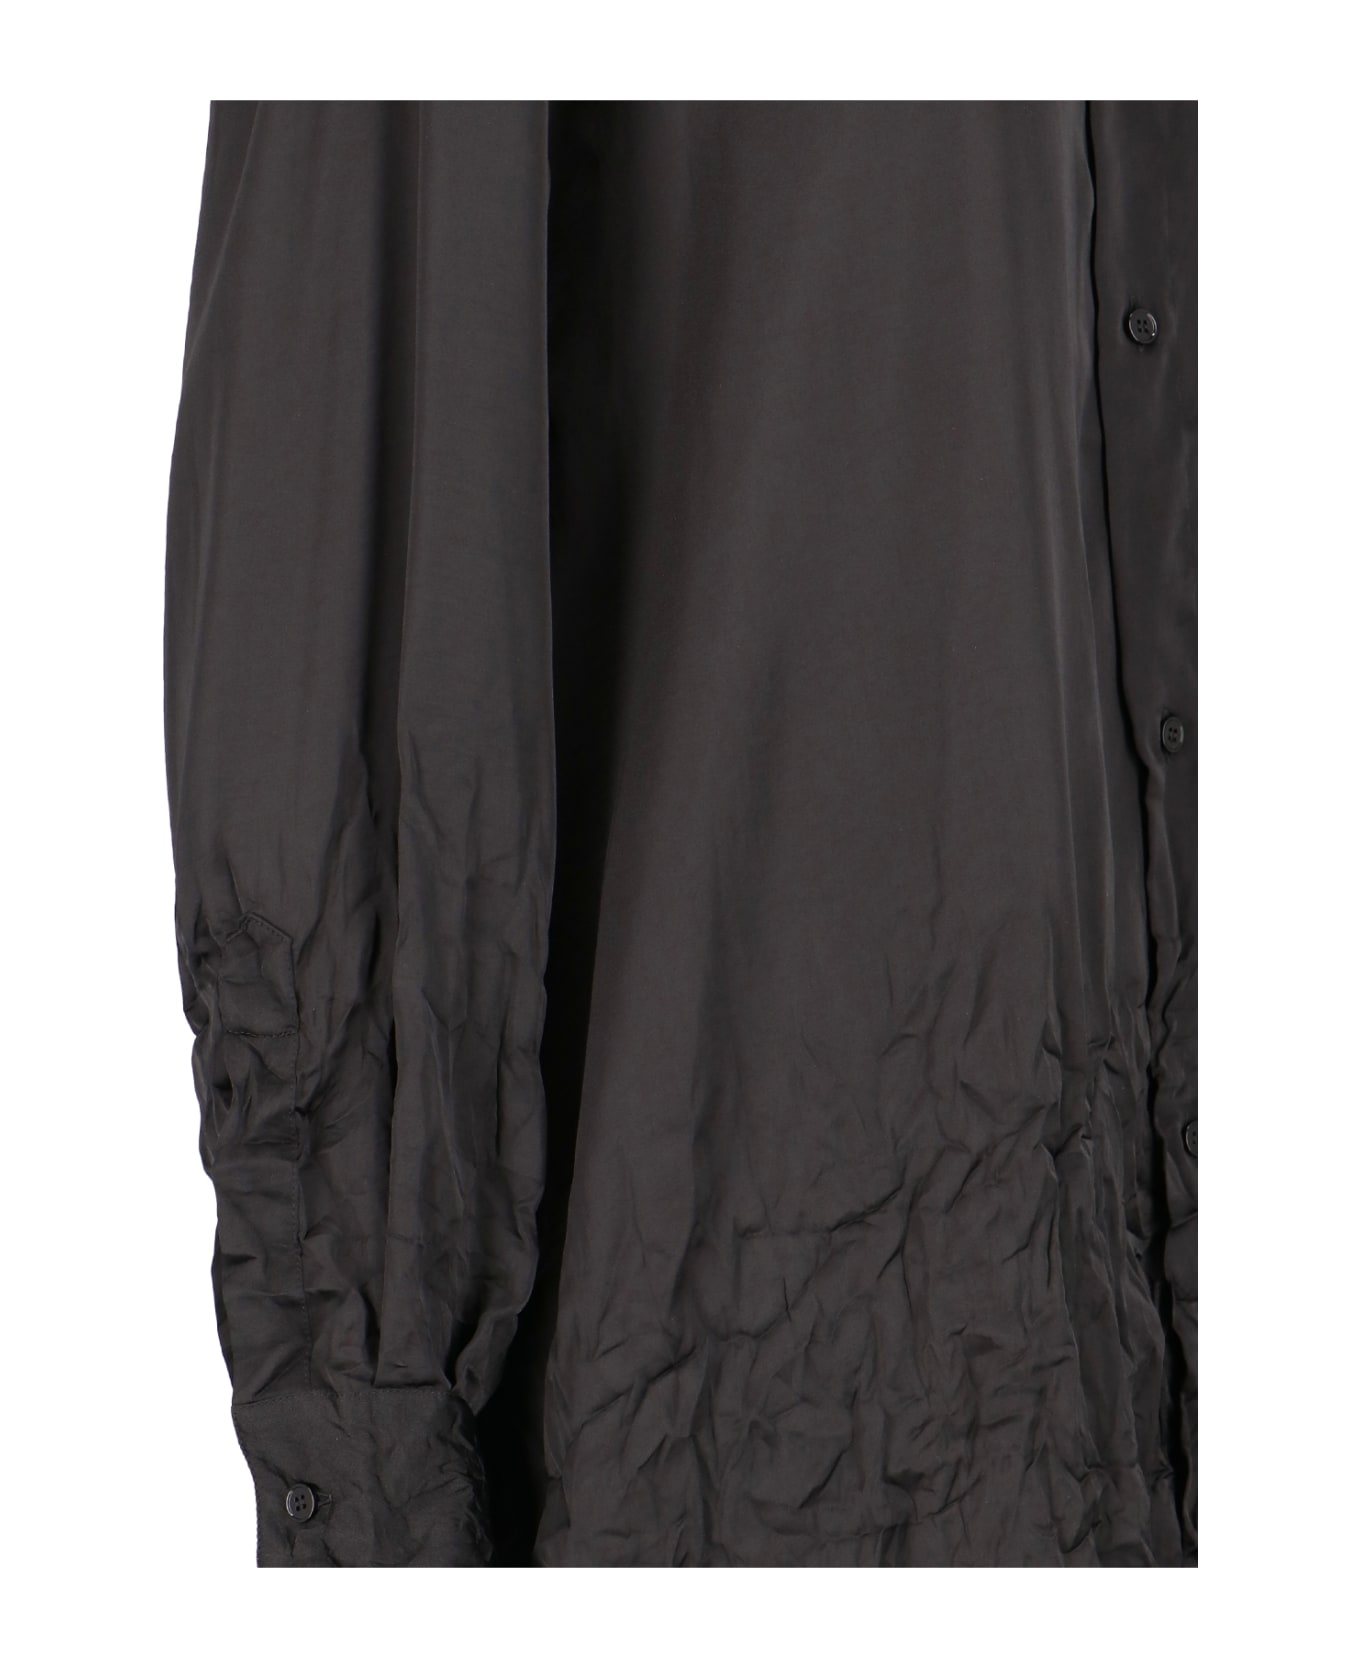 MM6 Maison Margiela Camicia A Maniche Lunghe Shirt/dress - Black シャツ